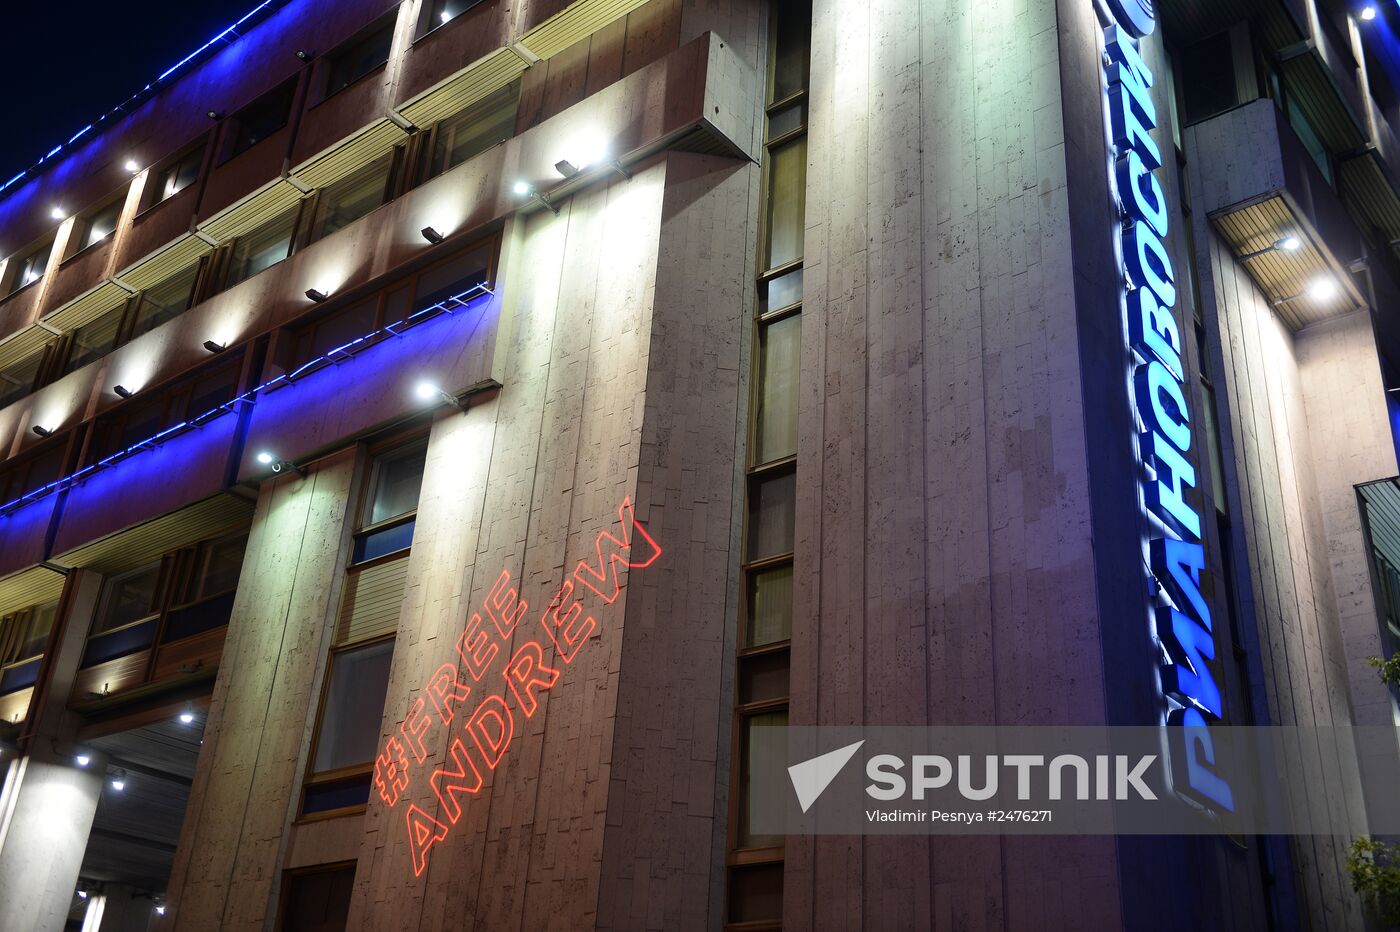 Hashtags in support of Andrei Stenin projected on Rossiya Segodnya building